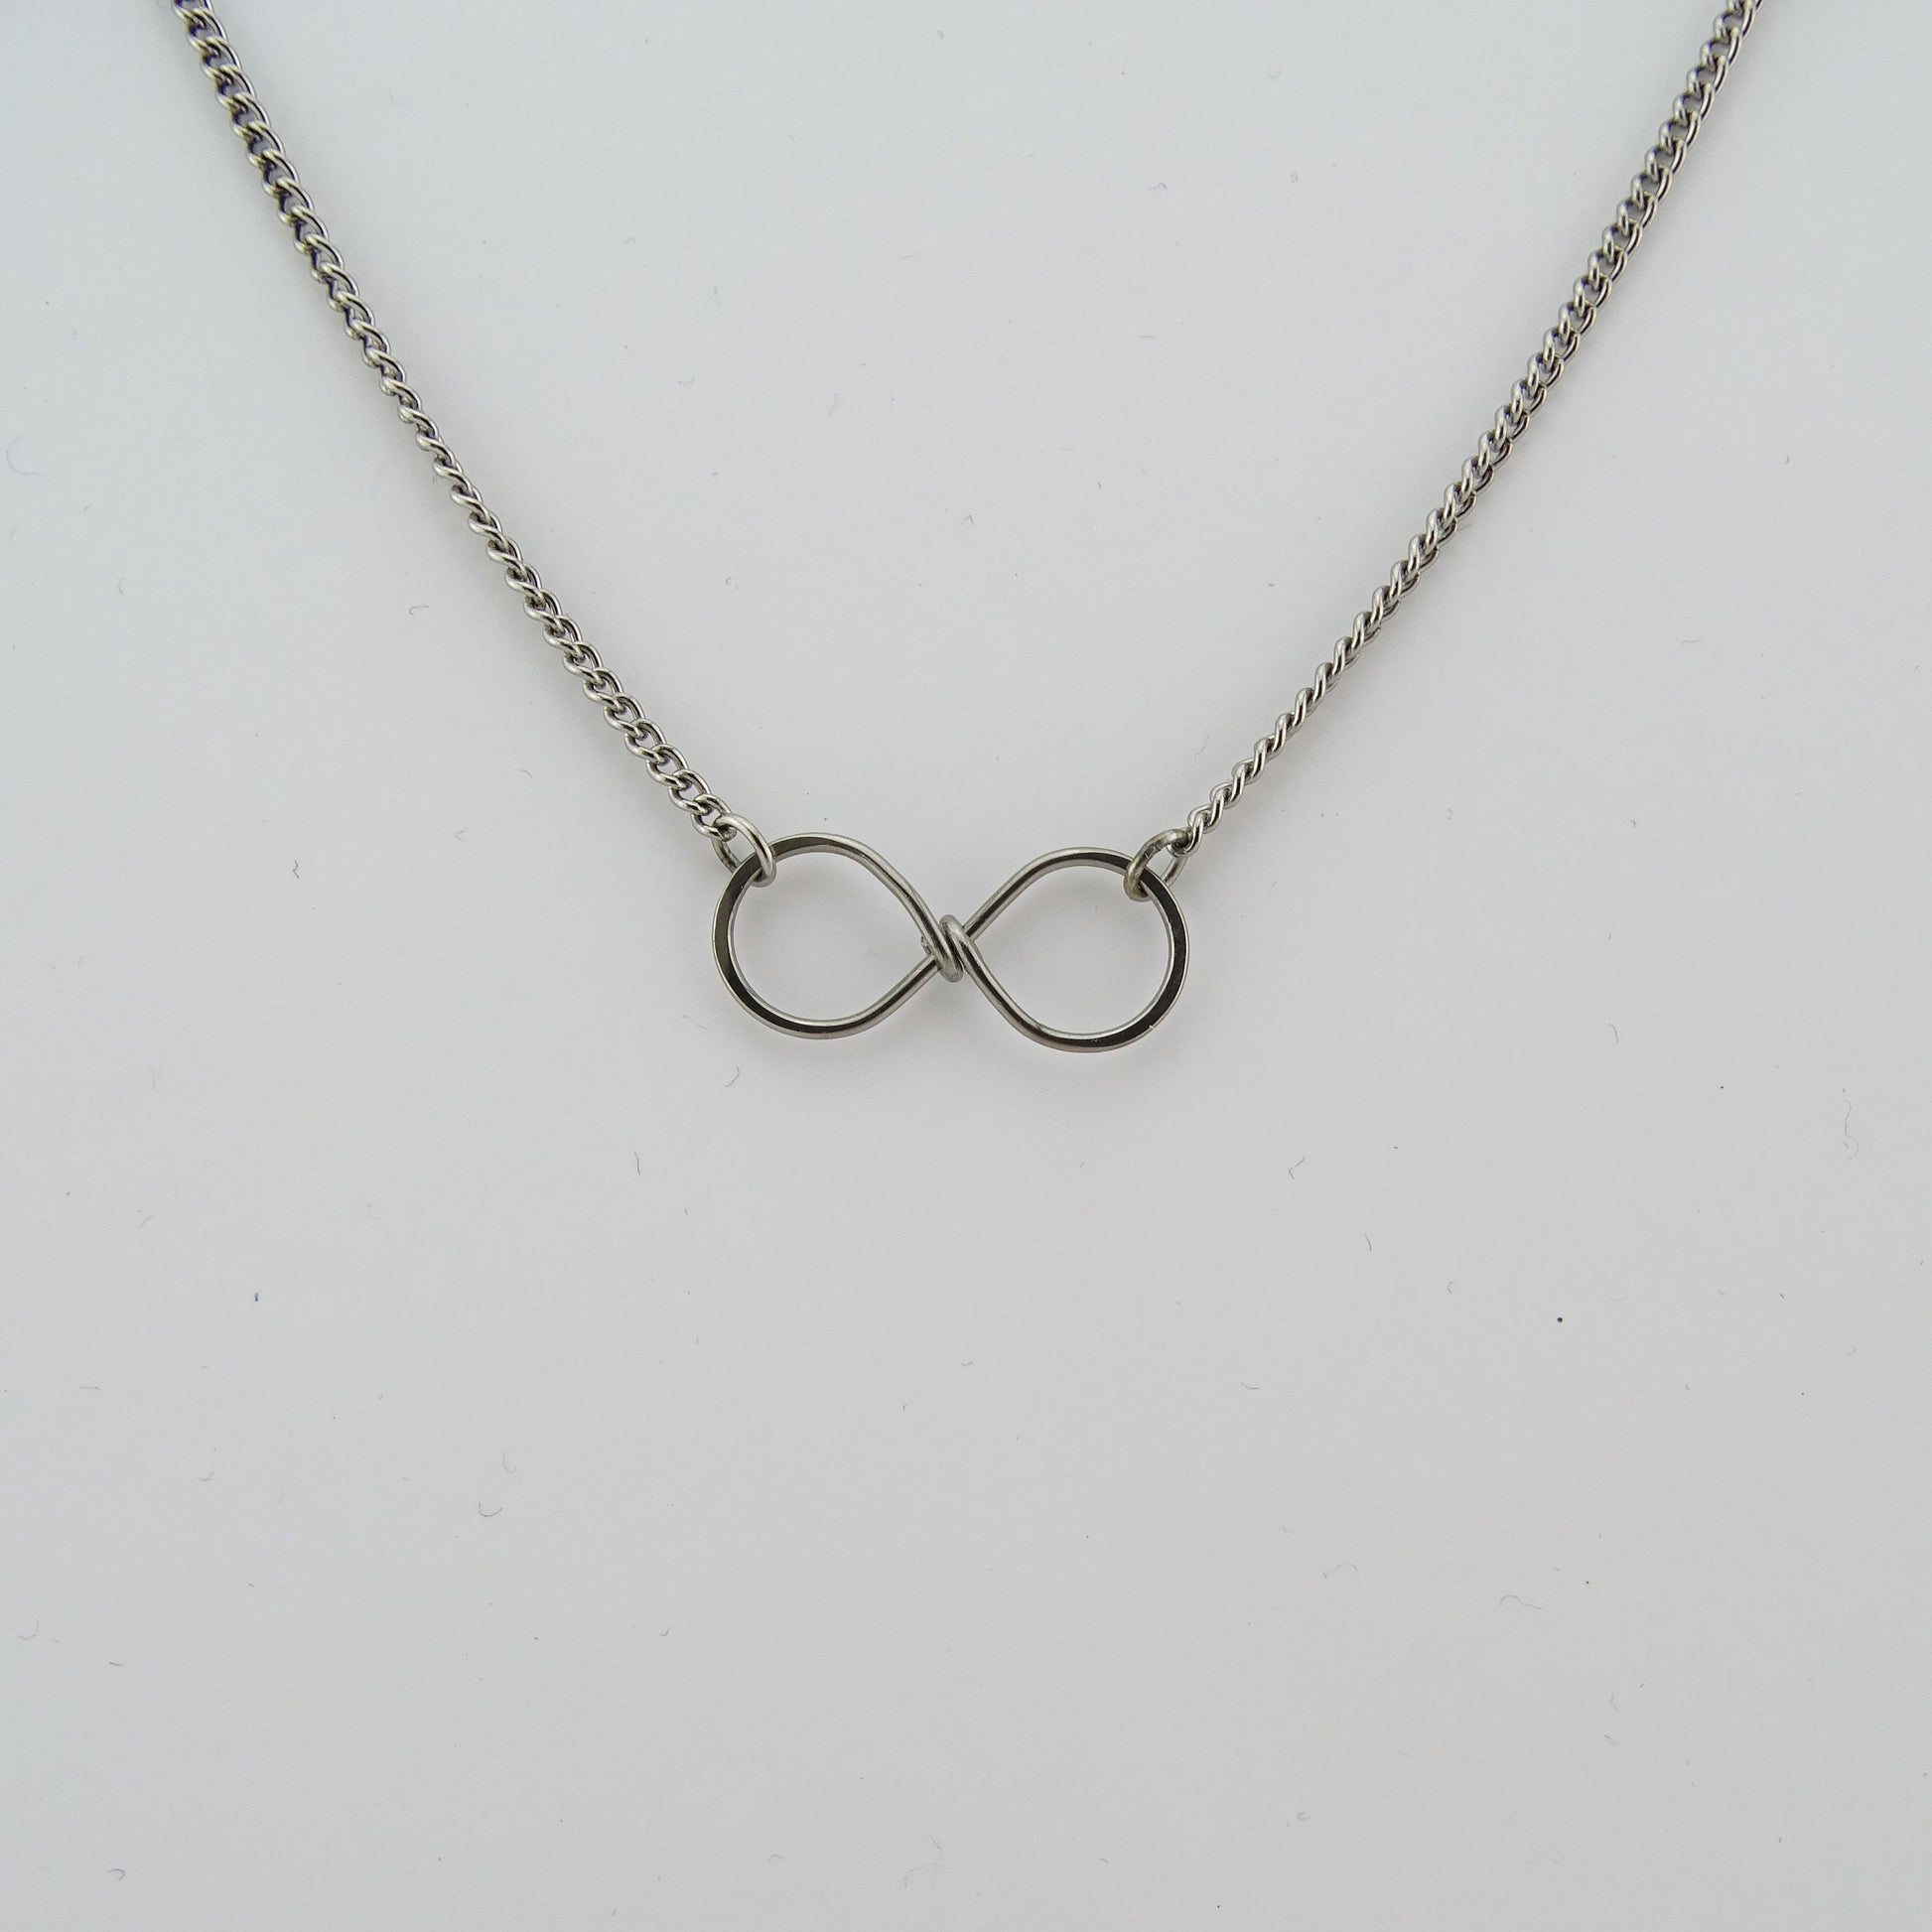 Infinity Charm Titanium Necklace for Sensitive Skin, Endless Love Symbol Niobium Necklace, Nickel Free Hypoallergenic Eternity Friendship